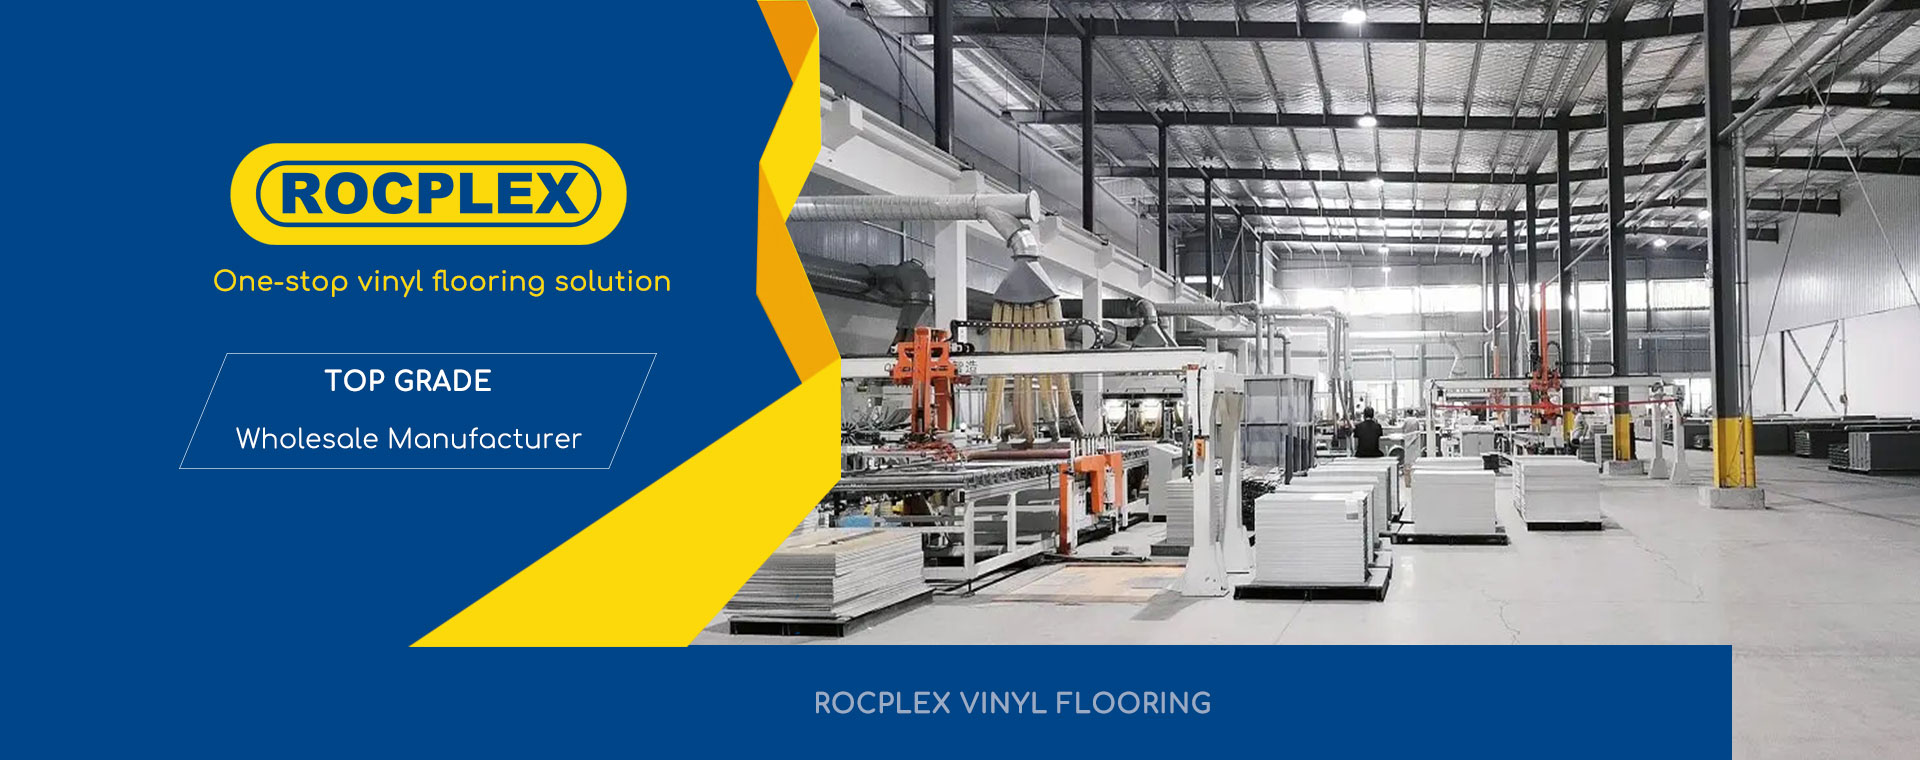 ROCPLEX Vinyl Flooring